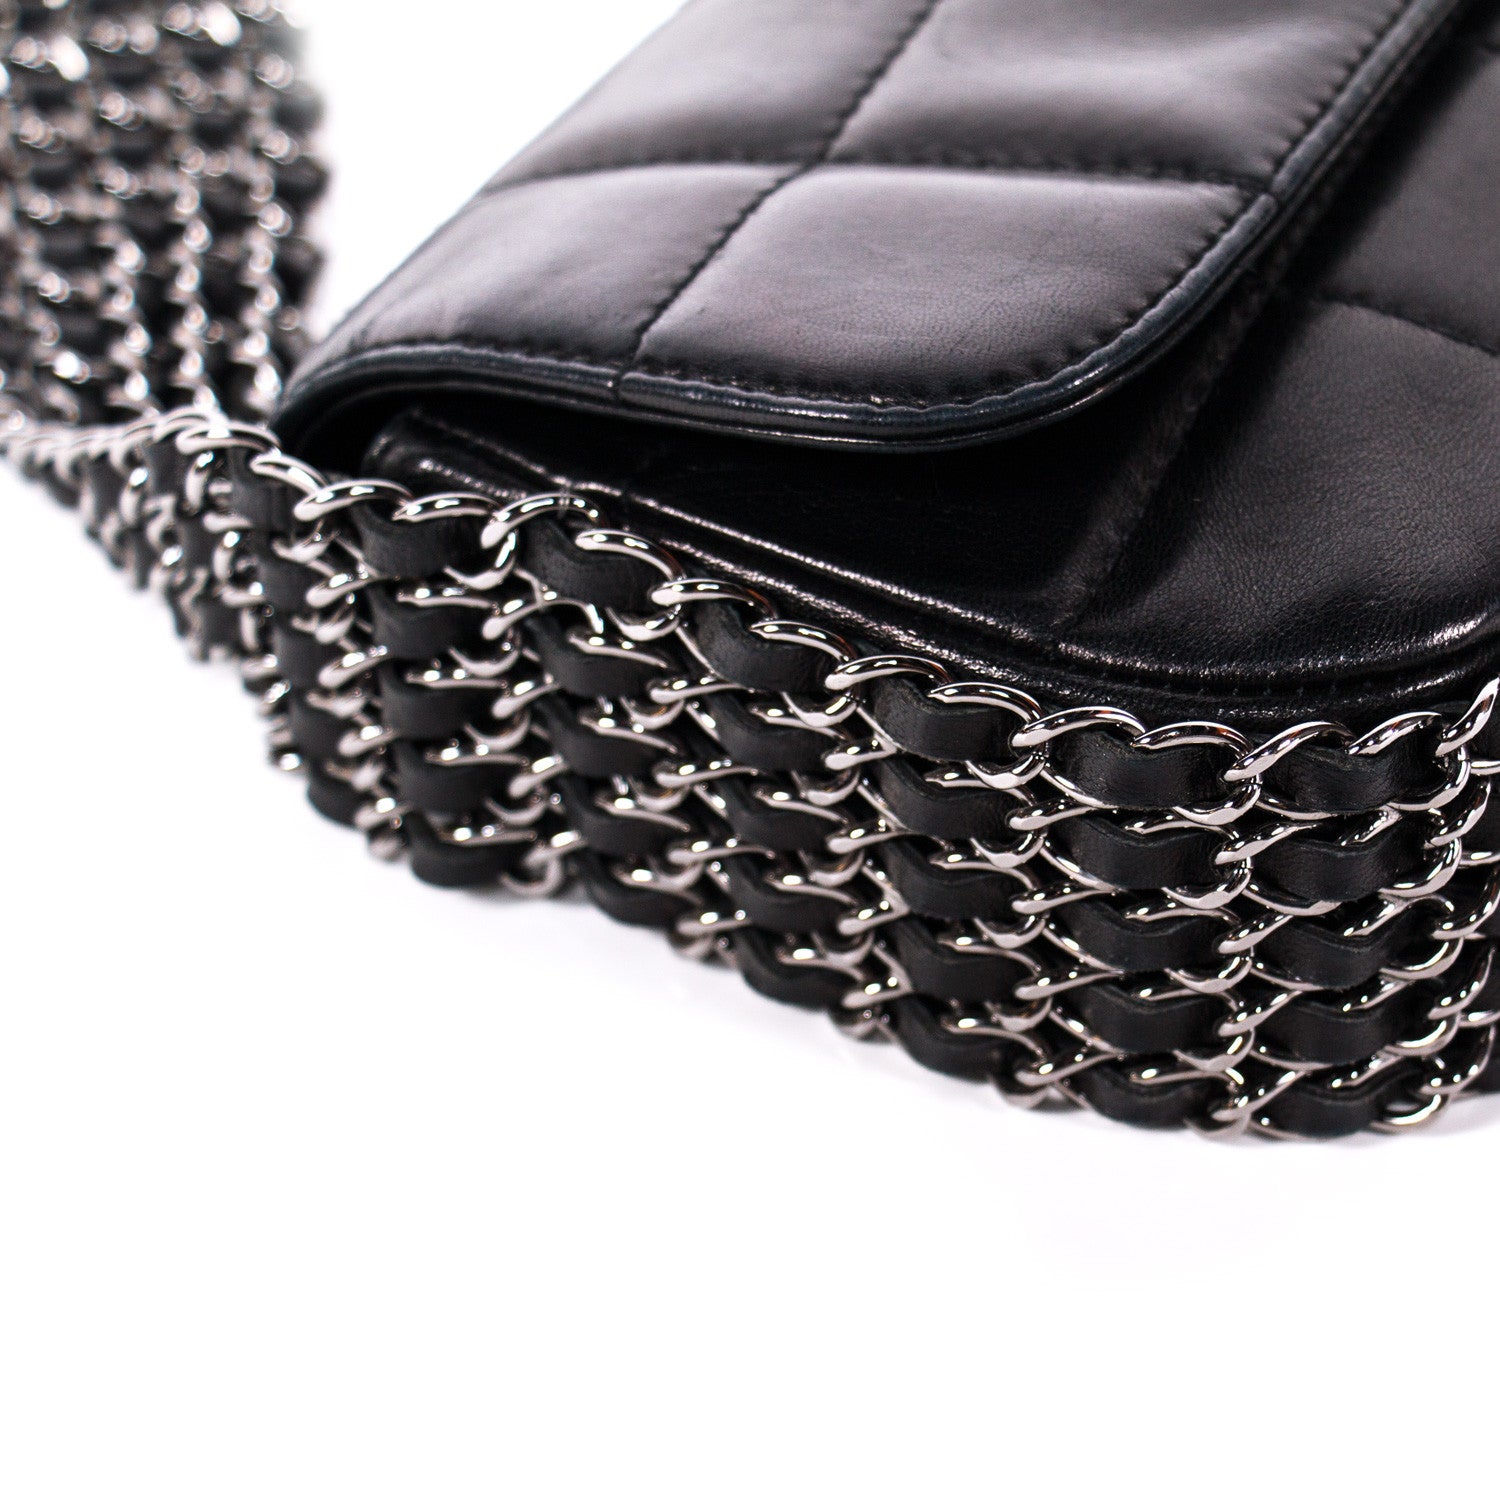 Shop authentic Chanel Multiple Chain Shoulder Bag at revogue for just ...